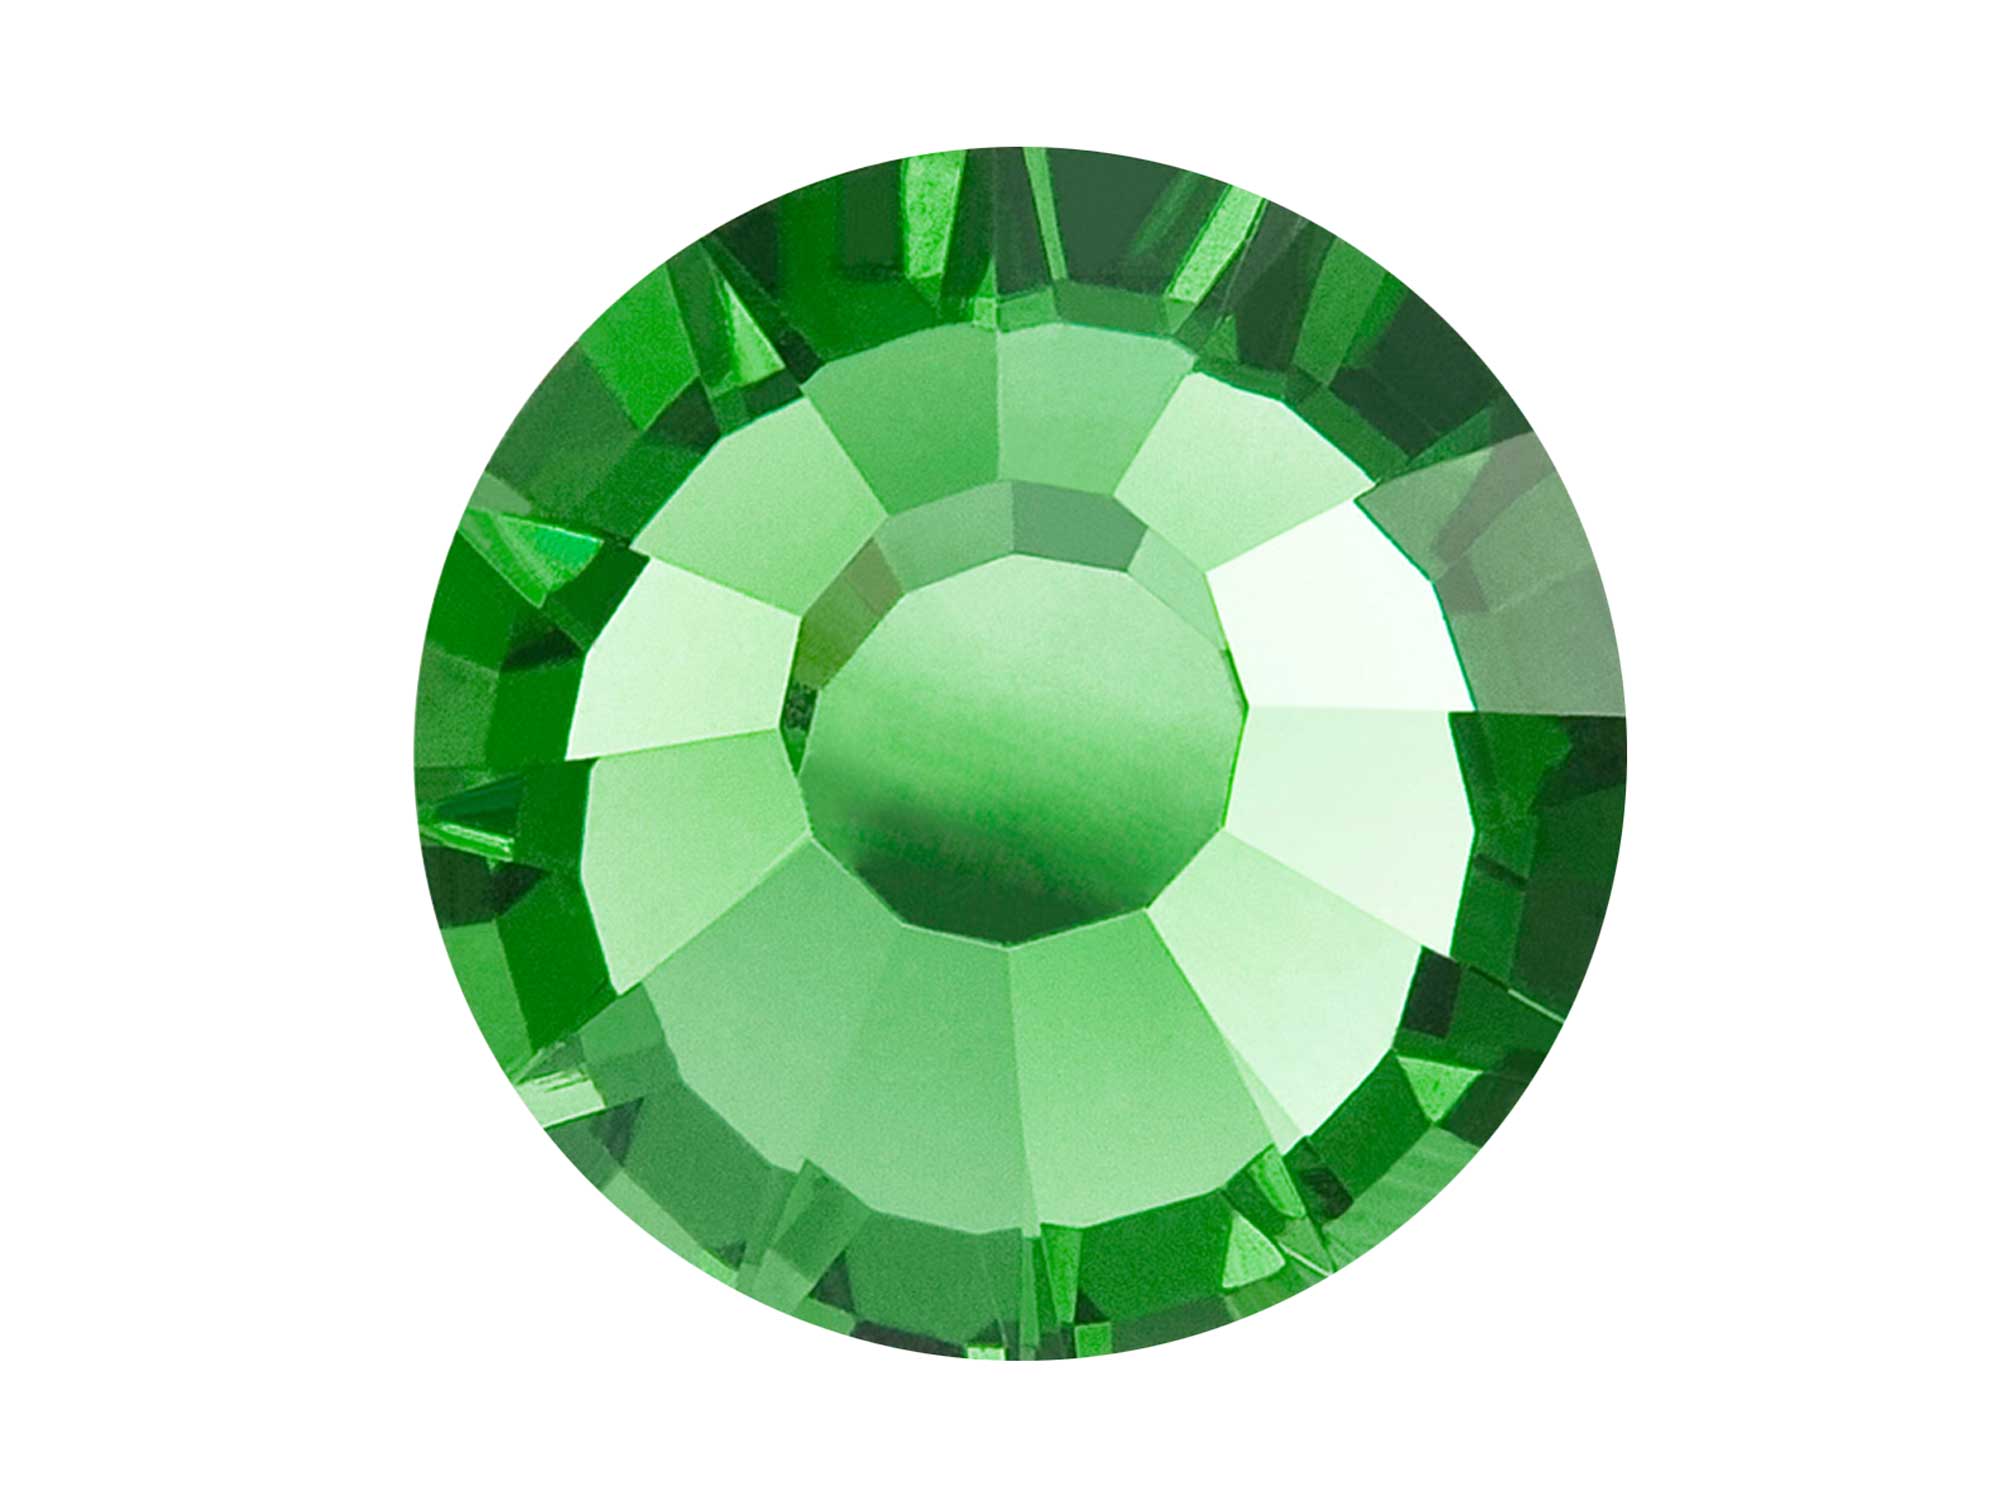 Shamrock, Preciosa Viva Chaton Roses Article 438-11-612 (Viva12 Rhinestone Flatbacks), Genuine Czech Crystals, medium emerald green color